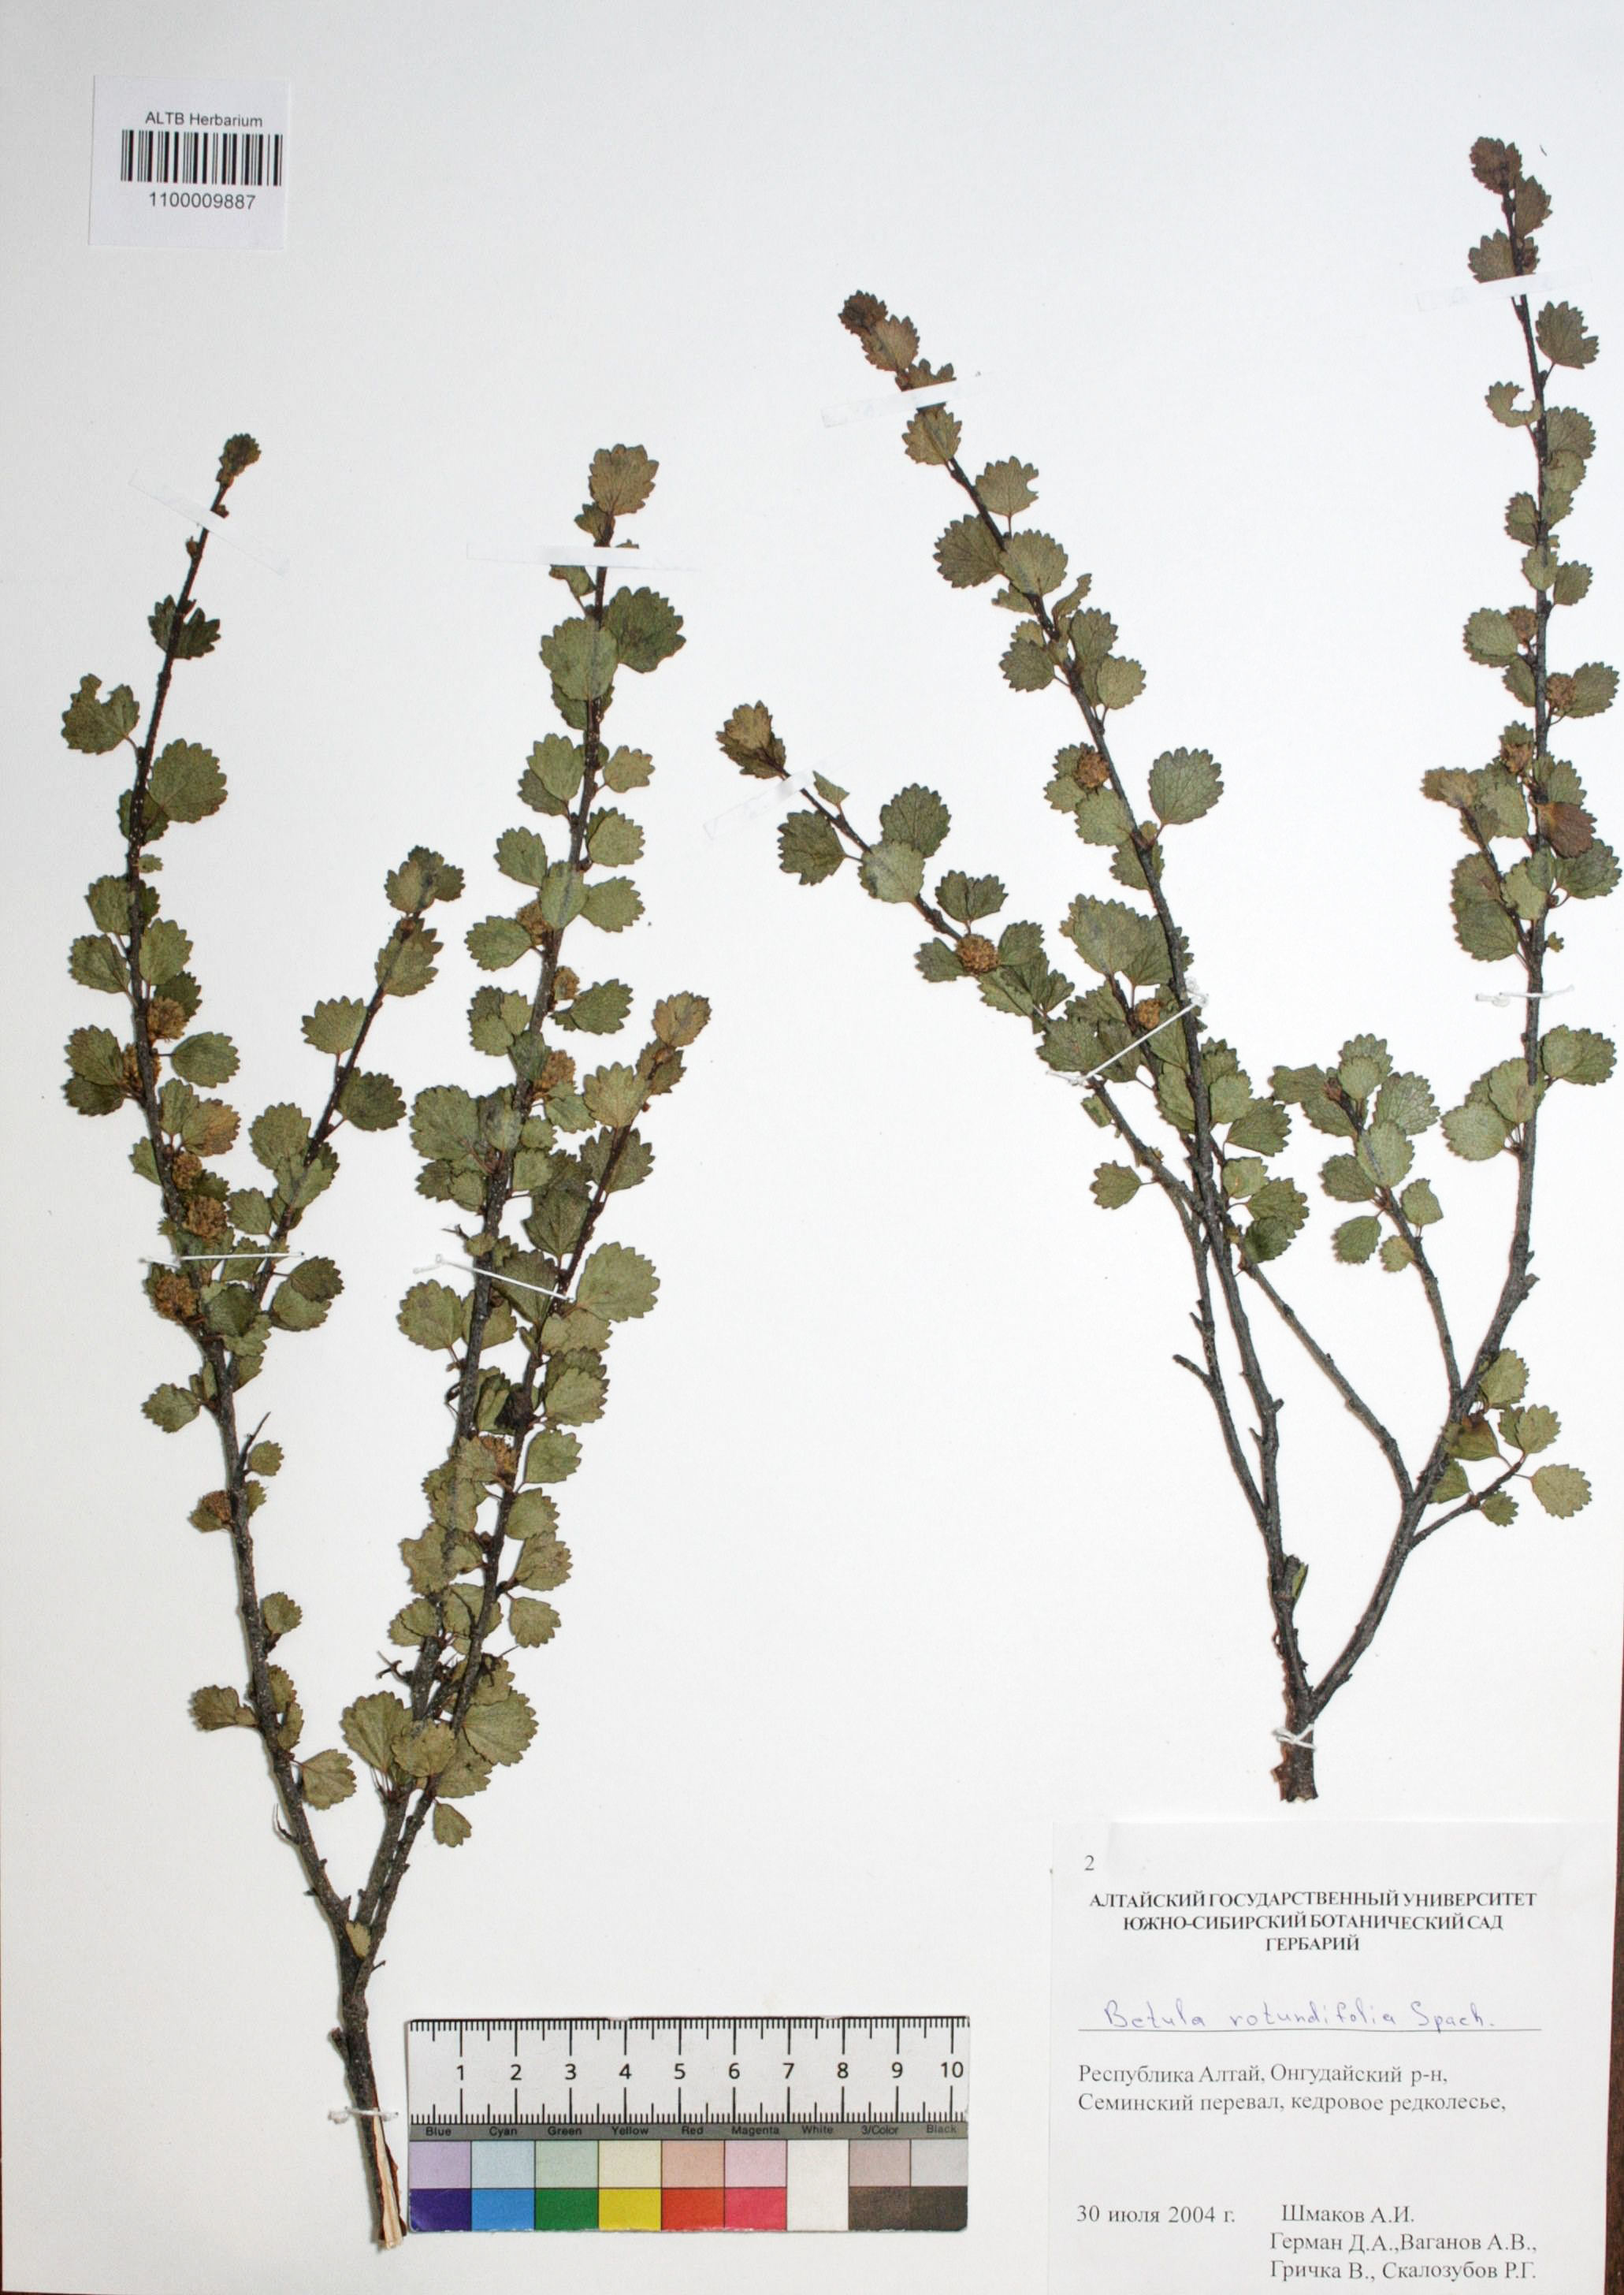 Betula rotundifolia Spach